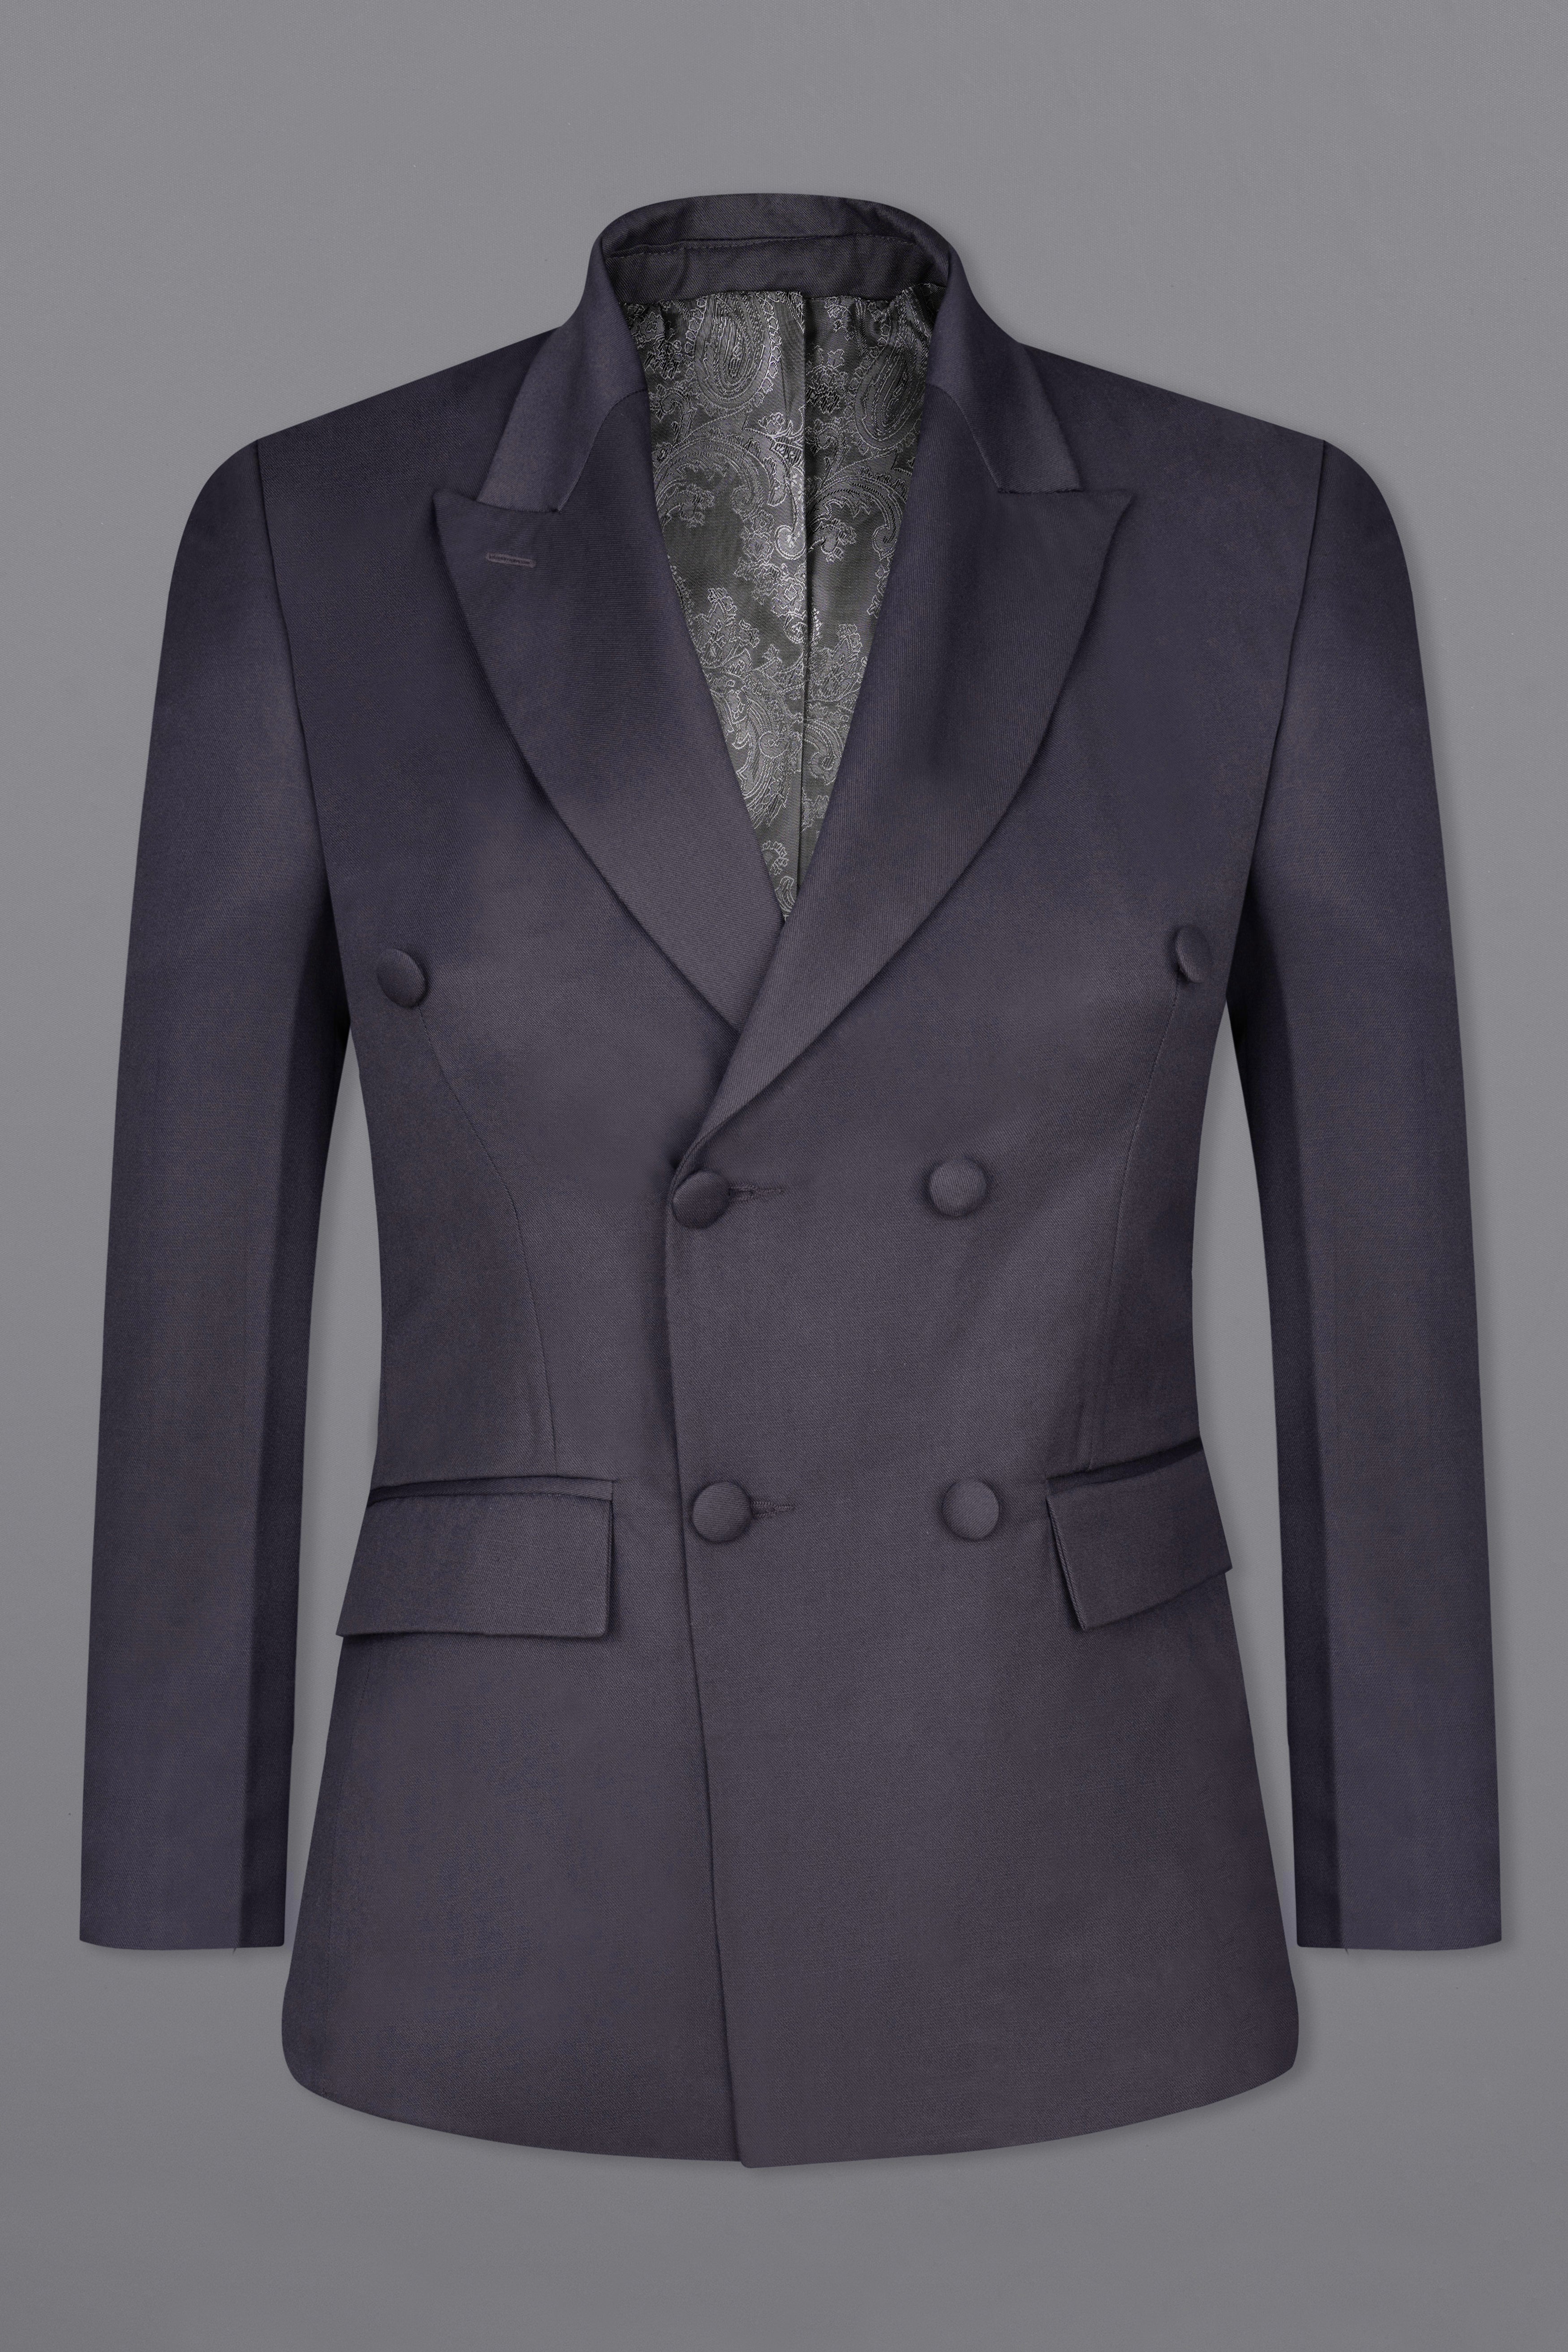 Gravel Gray Subtle Sheen Double Breasted Women's Suit